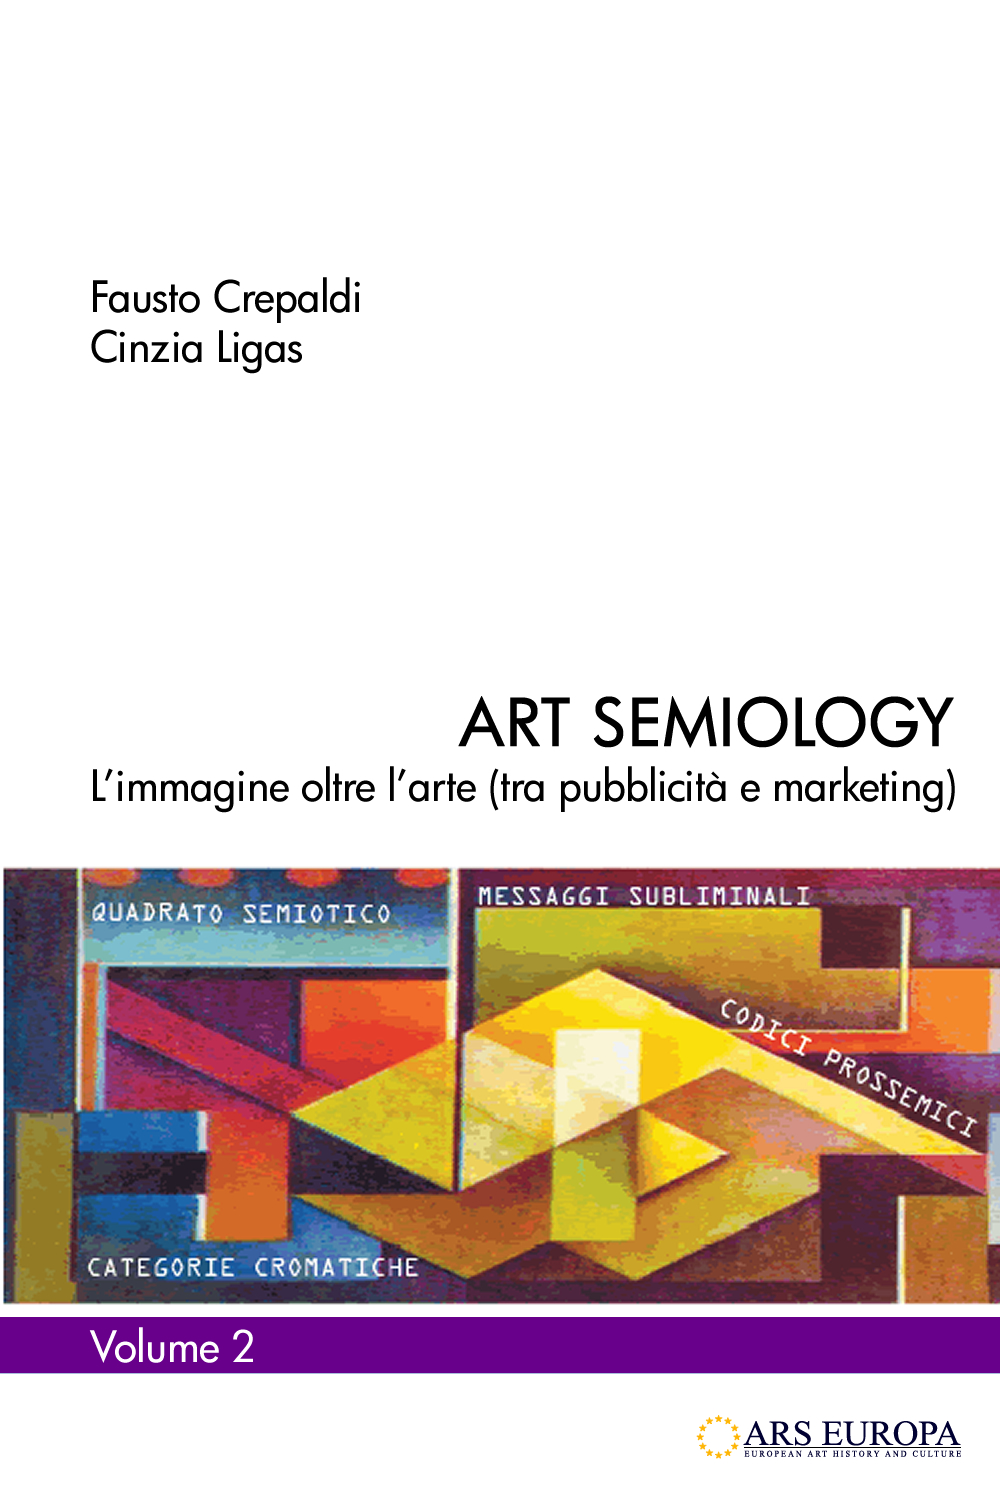 ART SEMIOLOGY - L'immagine oltre l'arte - Volume 1